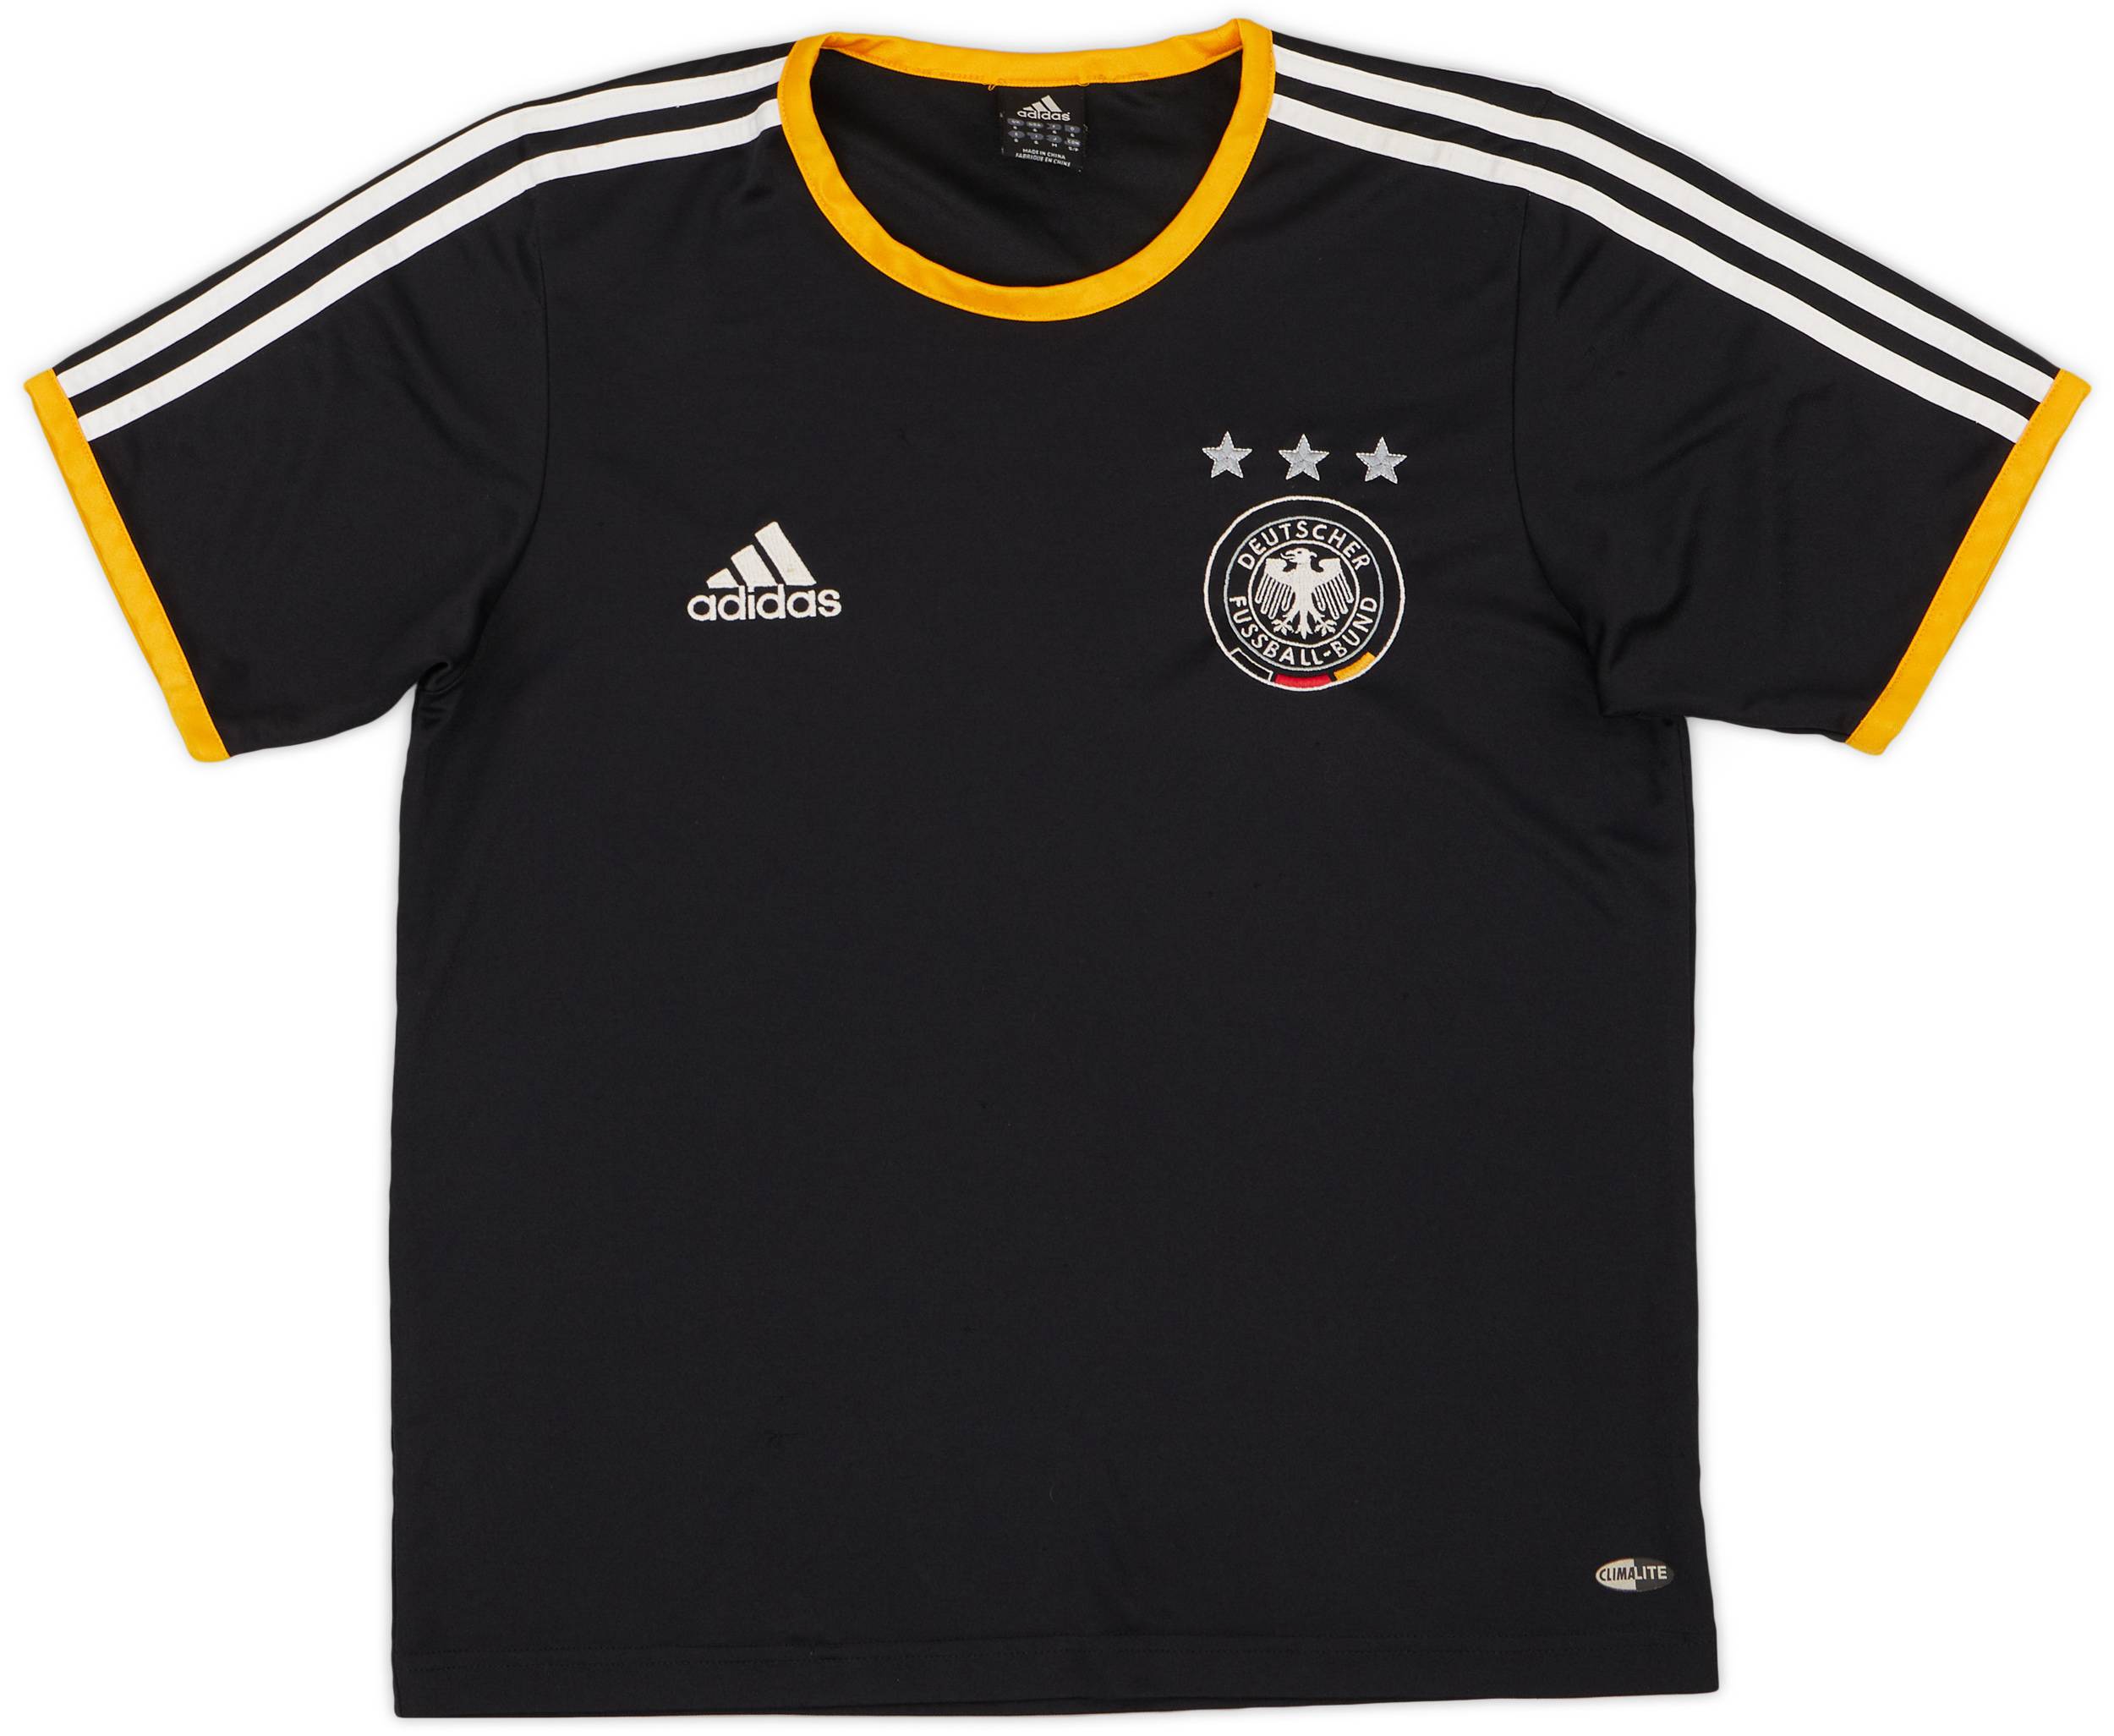 2004-05 Germany adidas Training Shirt - 8/10 - (S)